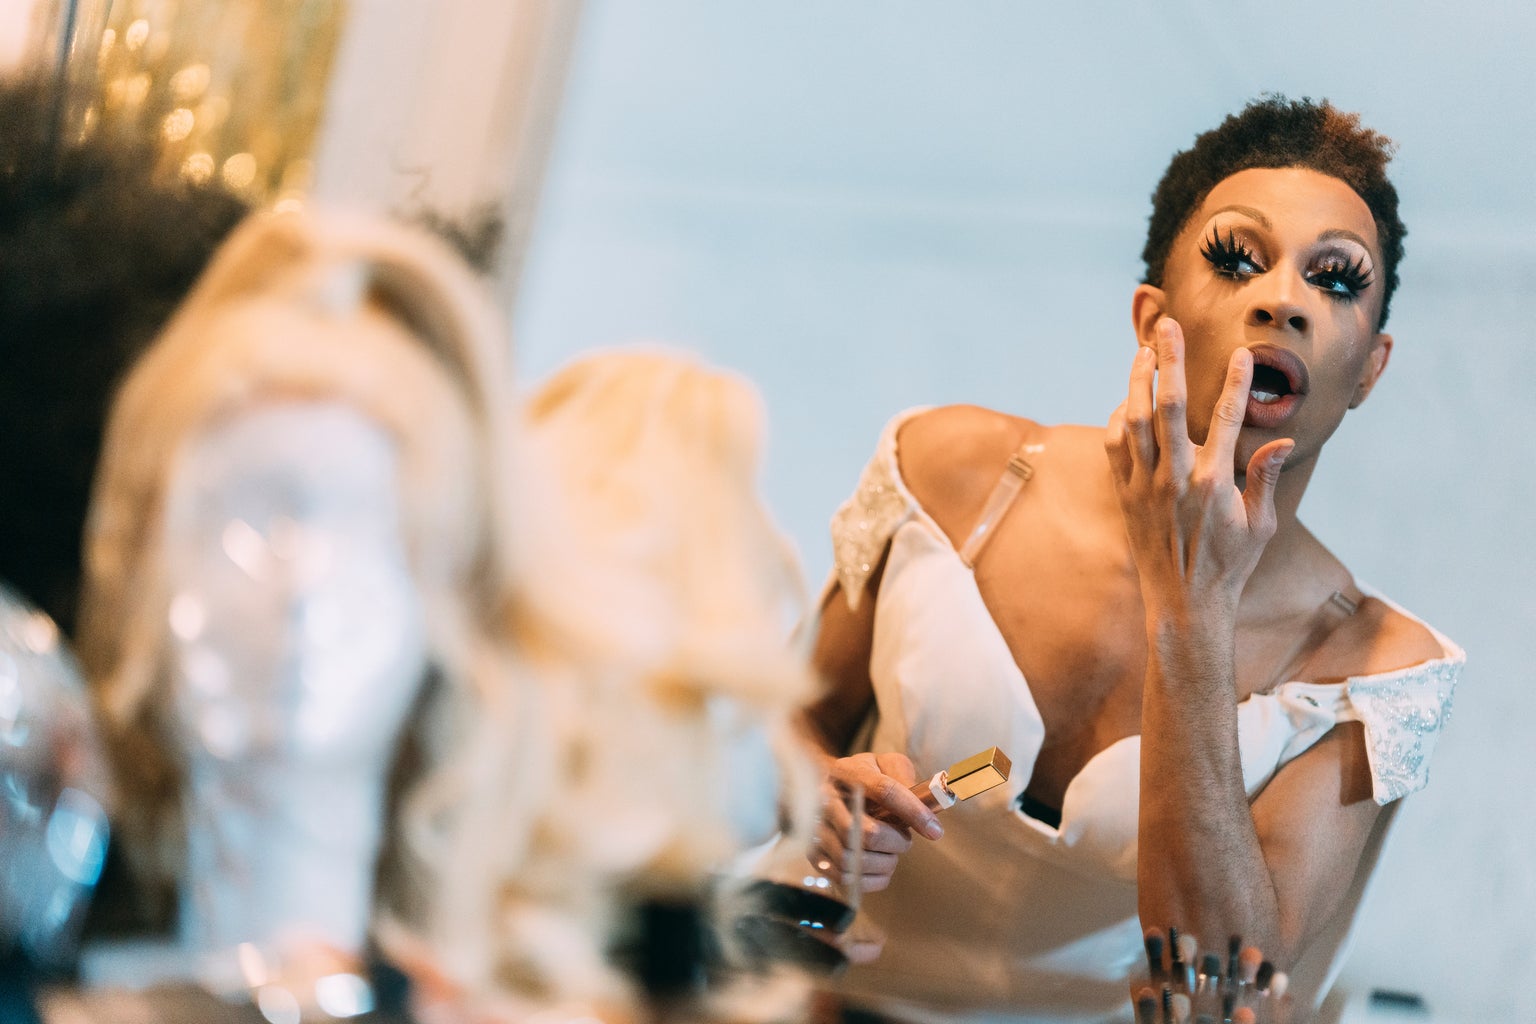 Drag queen getting ready applying lipstick in mirror